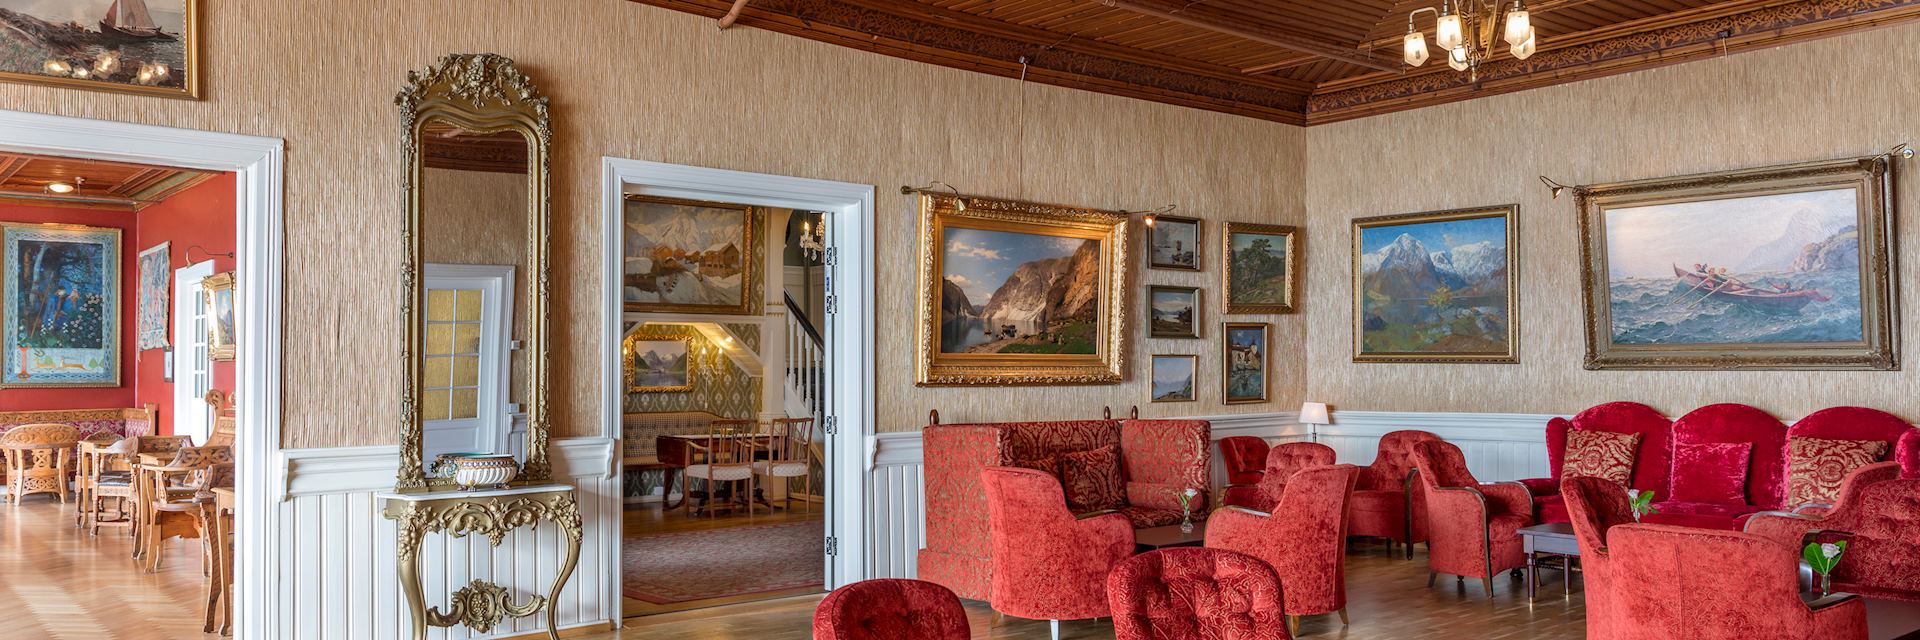 Kviknes Hotel, Norway